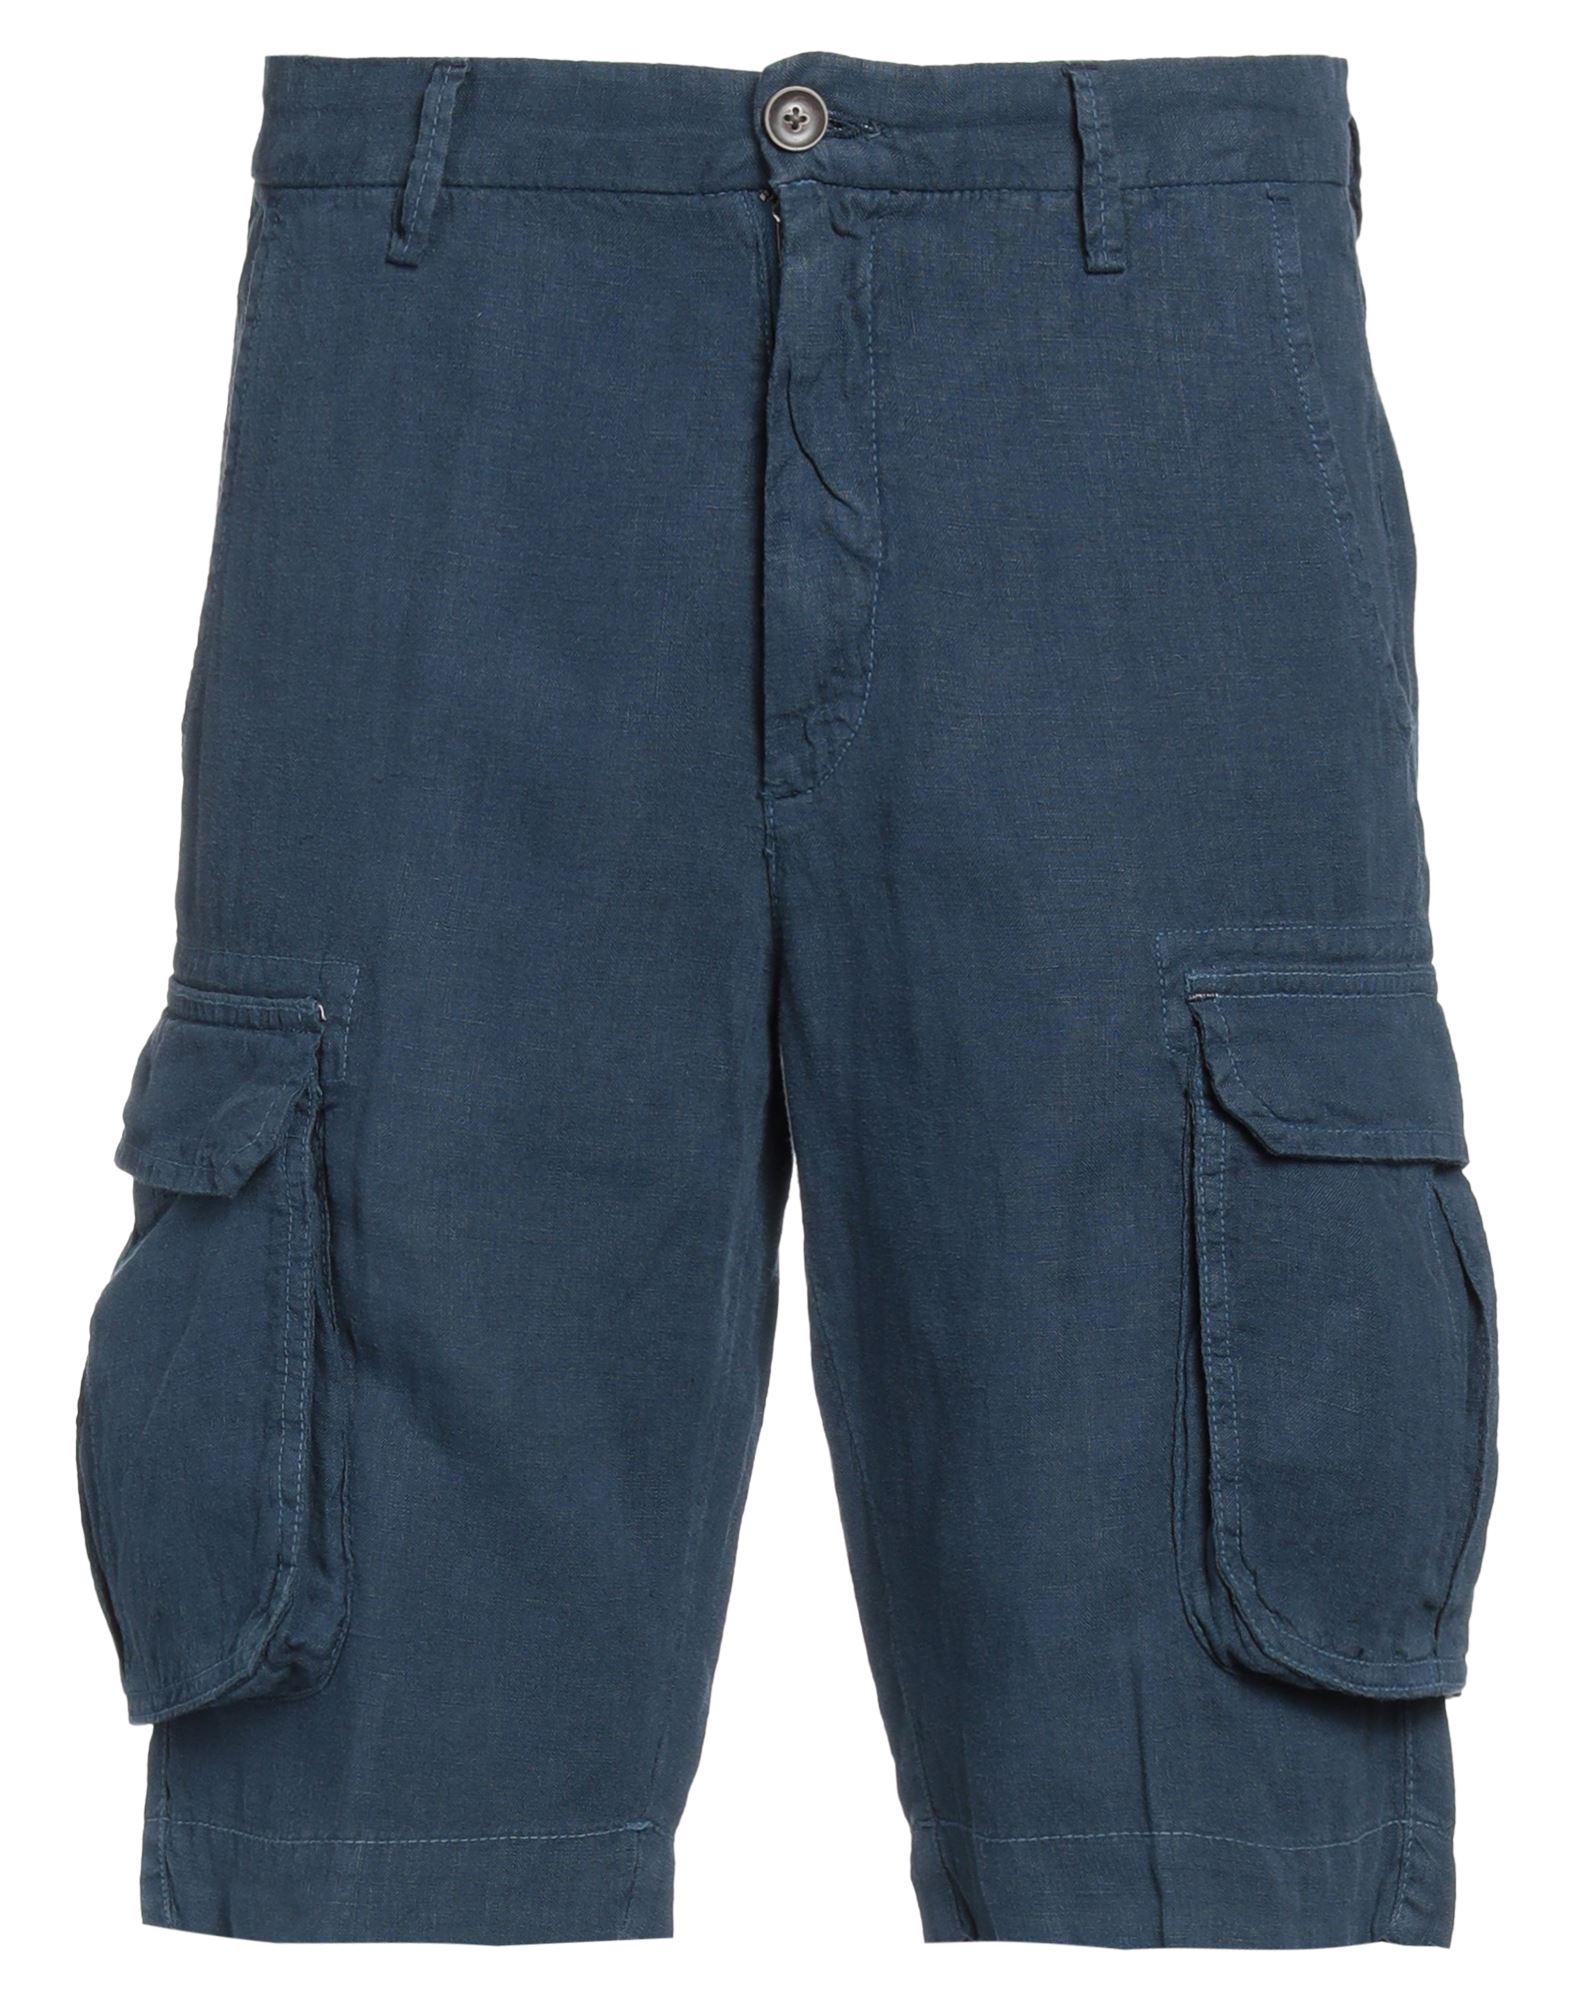 Markup Man Shorts & Bermuda Shorts Slate Blue Size 26 Linen